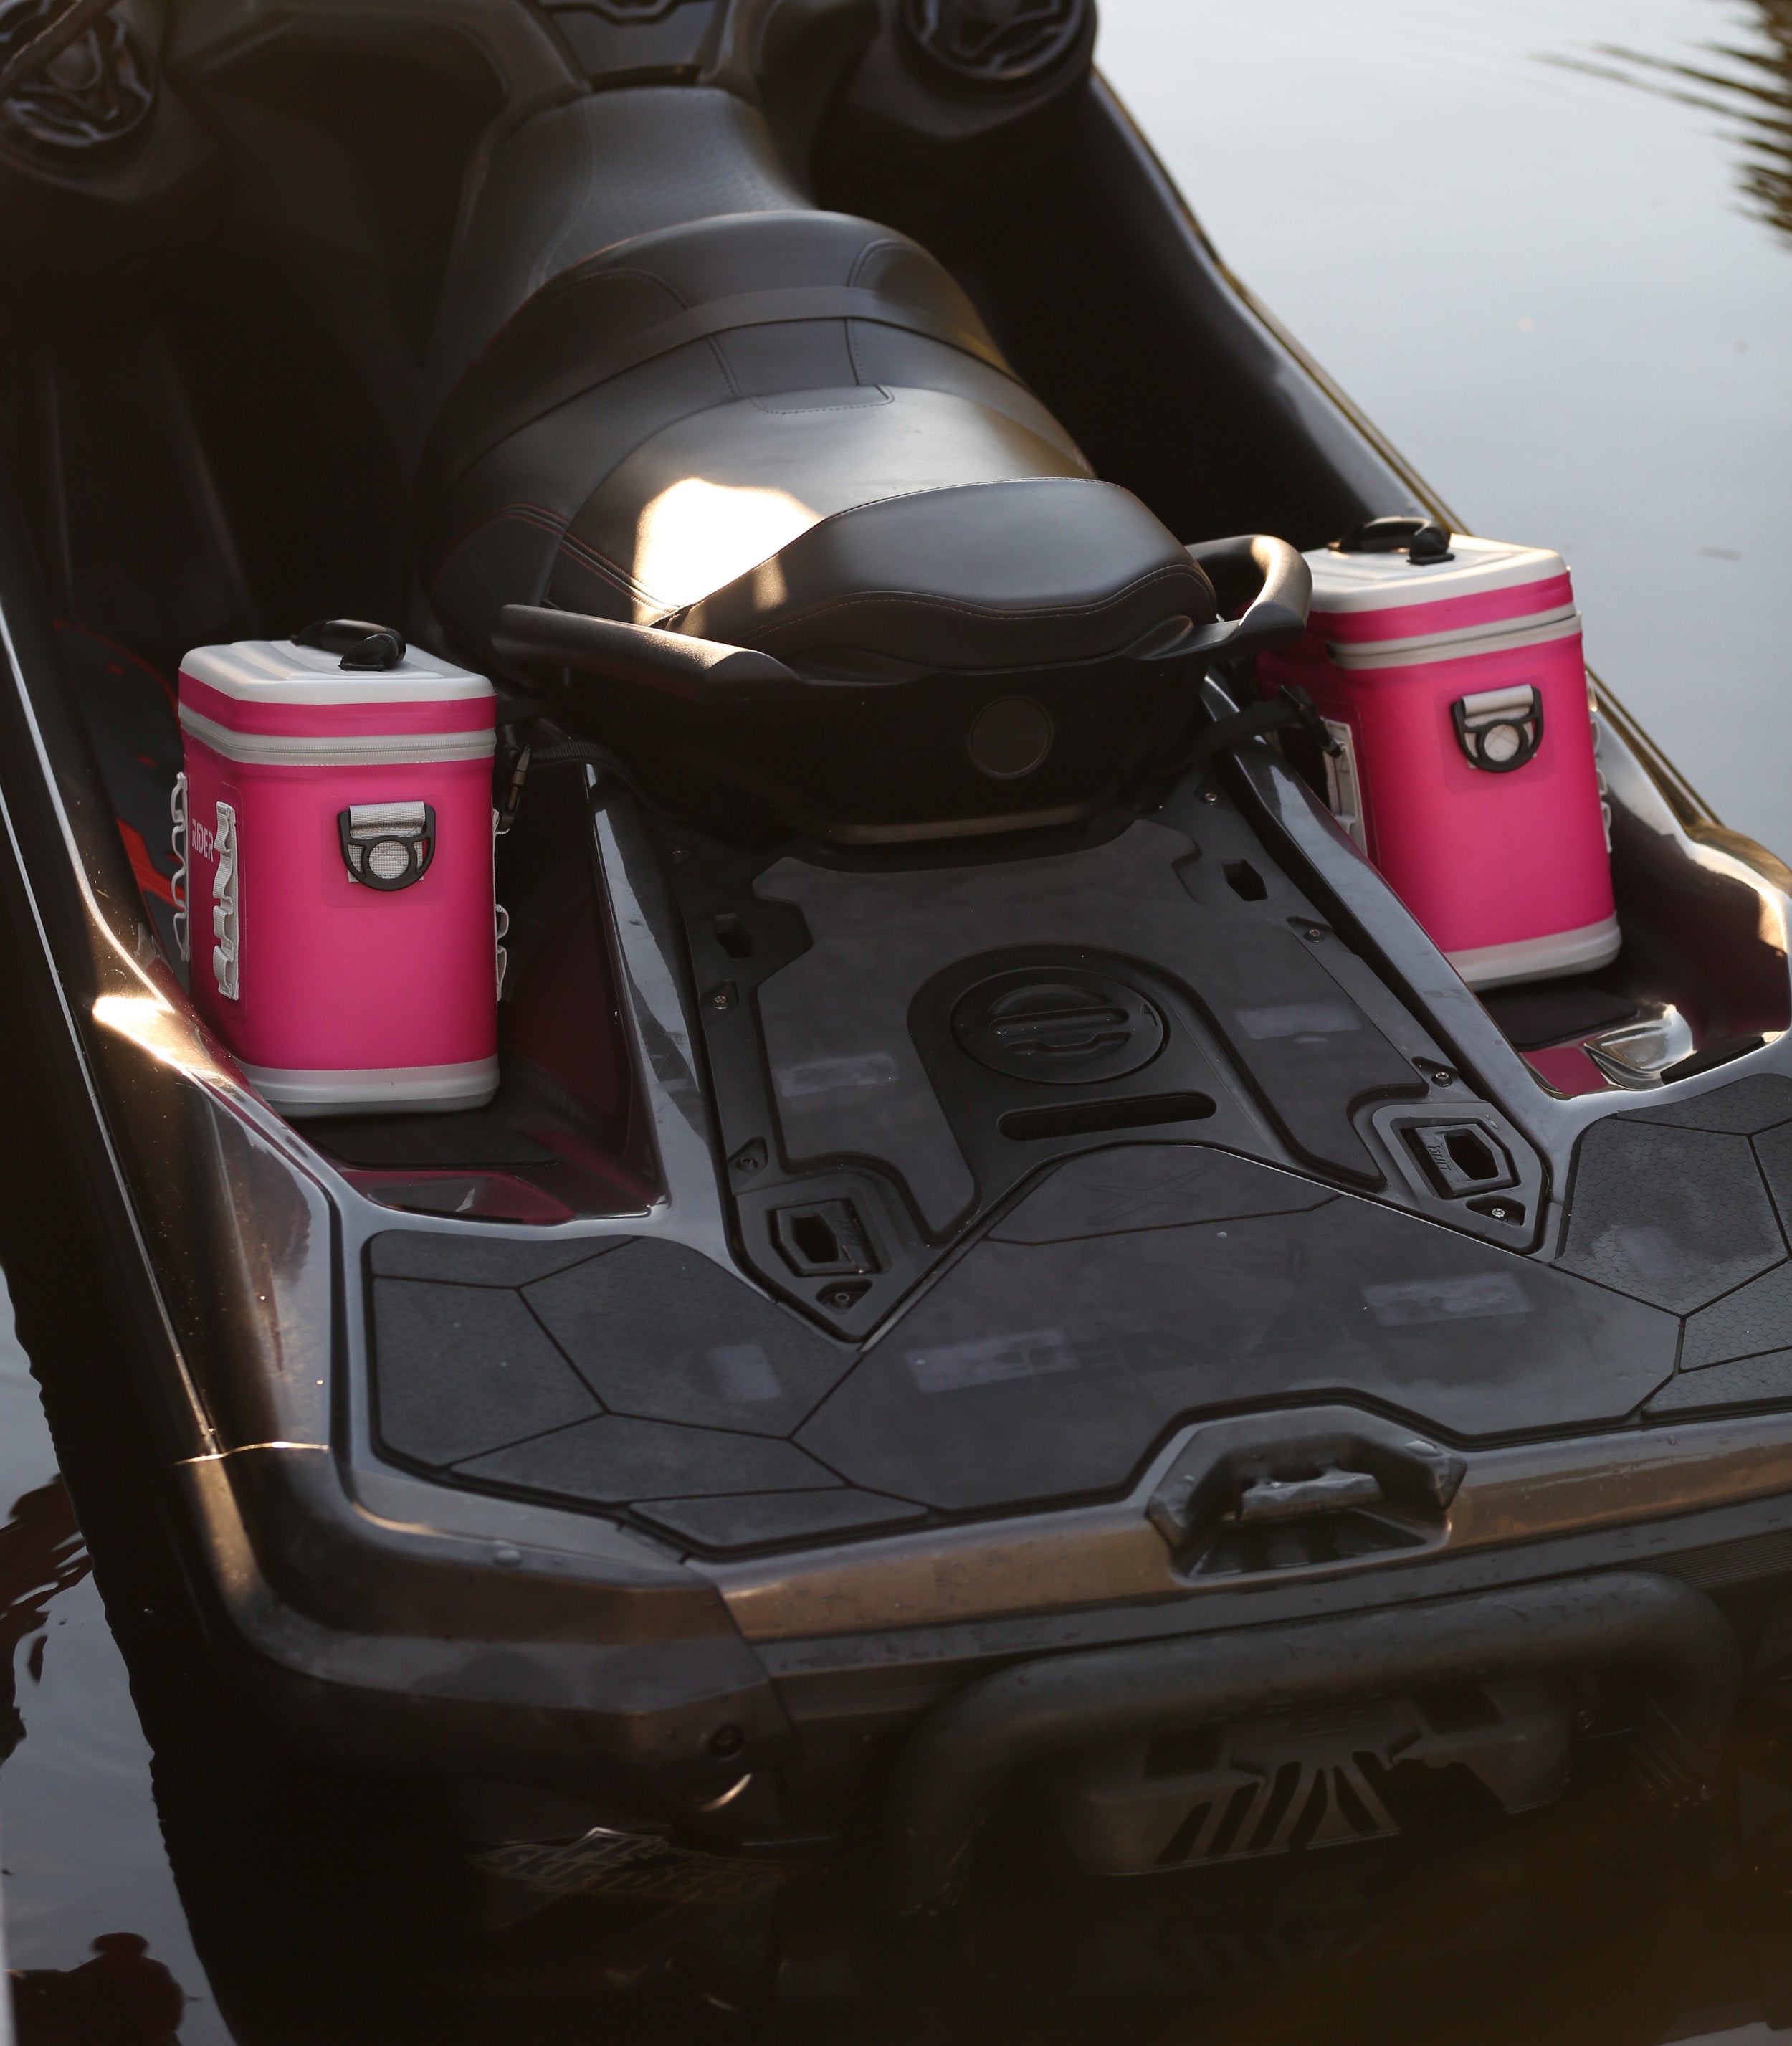 Pink Rider PWC Coolers Jet Ski Coolers Set of 2